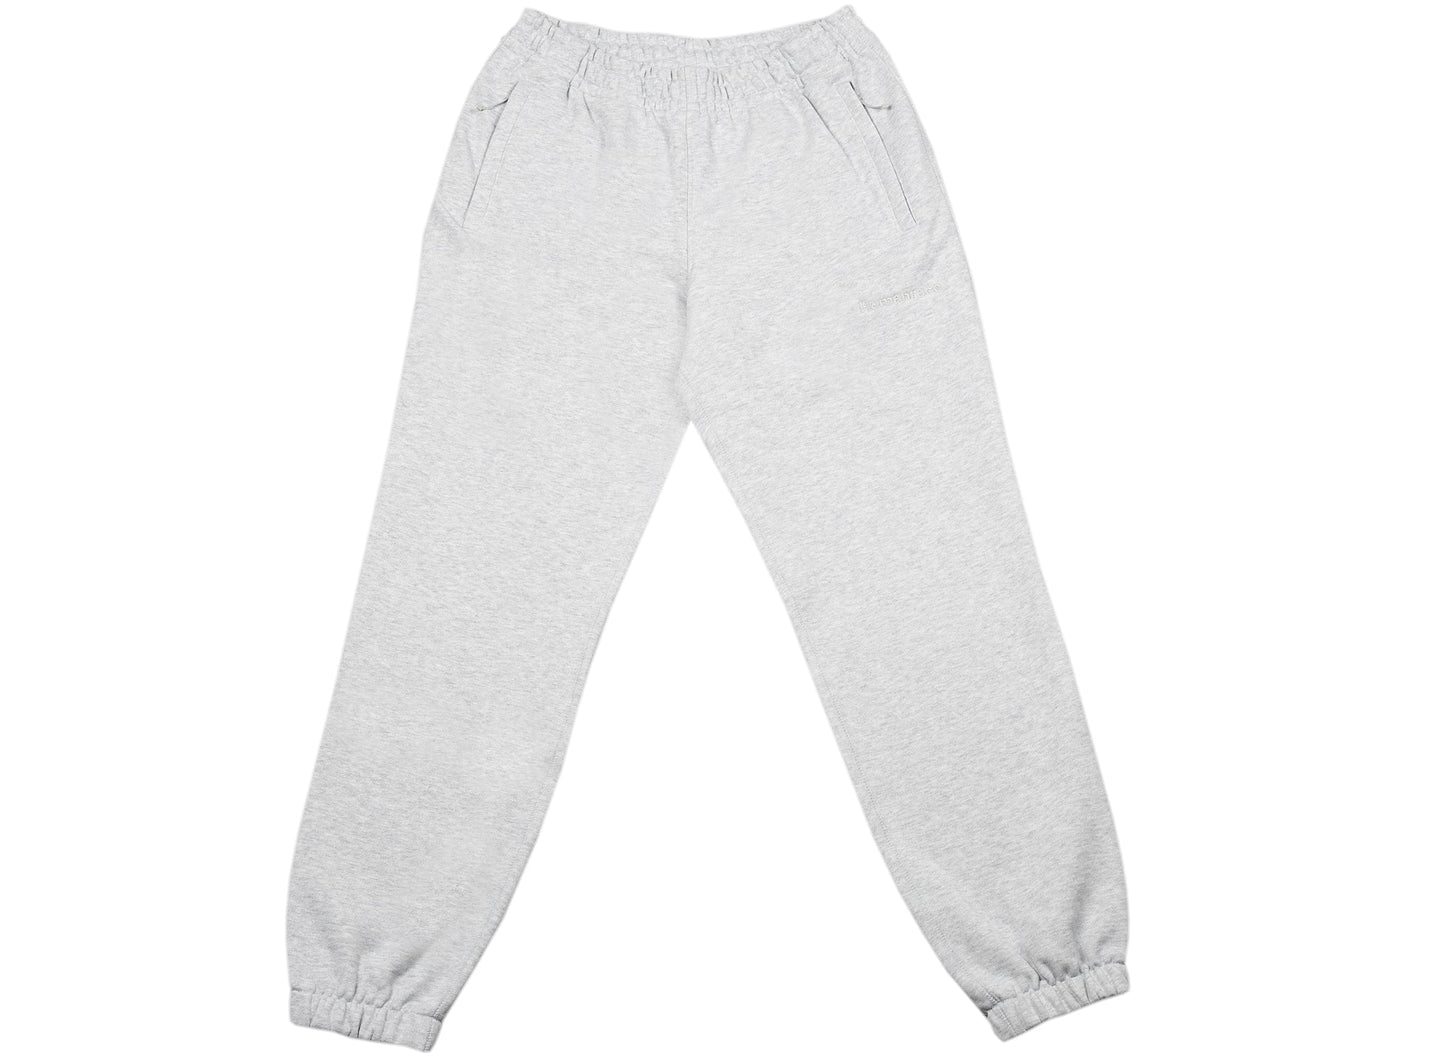 Adidas Pharrell Williams Basics Pants in Light Grey